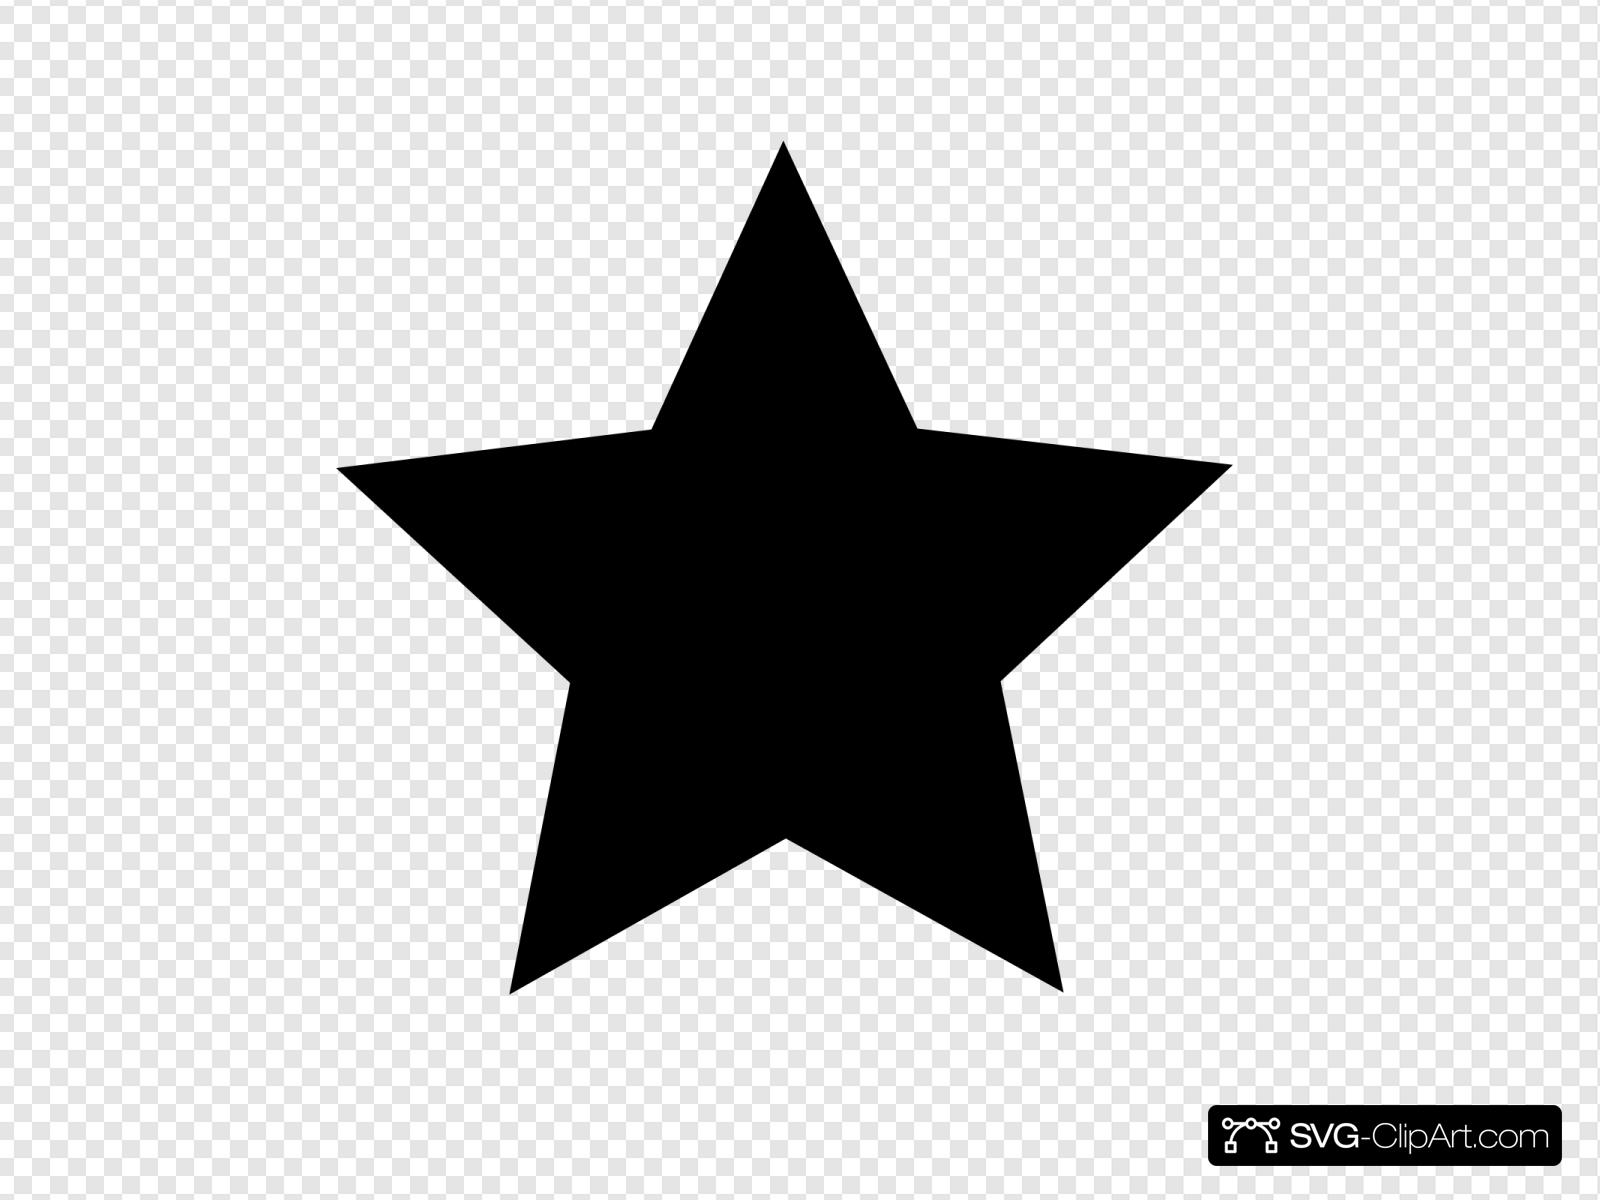 Black Star Clip art, Icon and SVG.